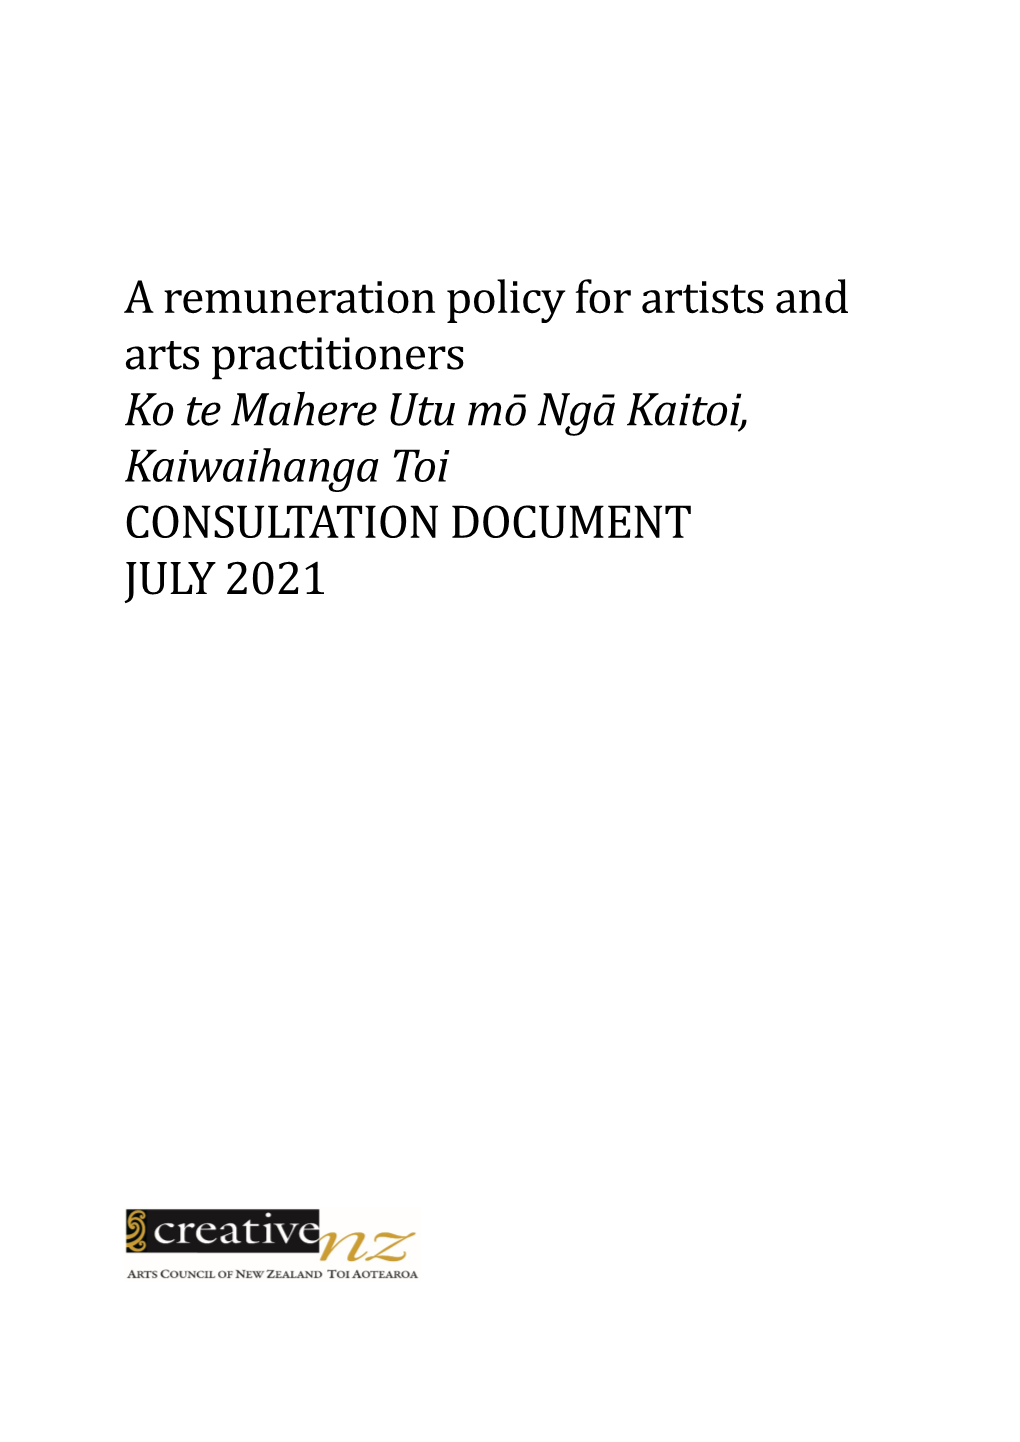 A Remuneration Policy for Artists and Arts Practitioners Ko Te Mahere Utu Mō Ngā Kaitoi, Kaiwaihanga Toi CONSULTATION DOCUMENT JULY 2021